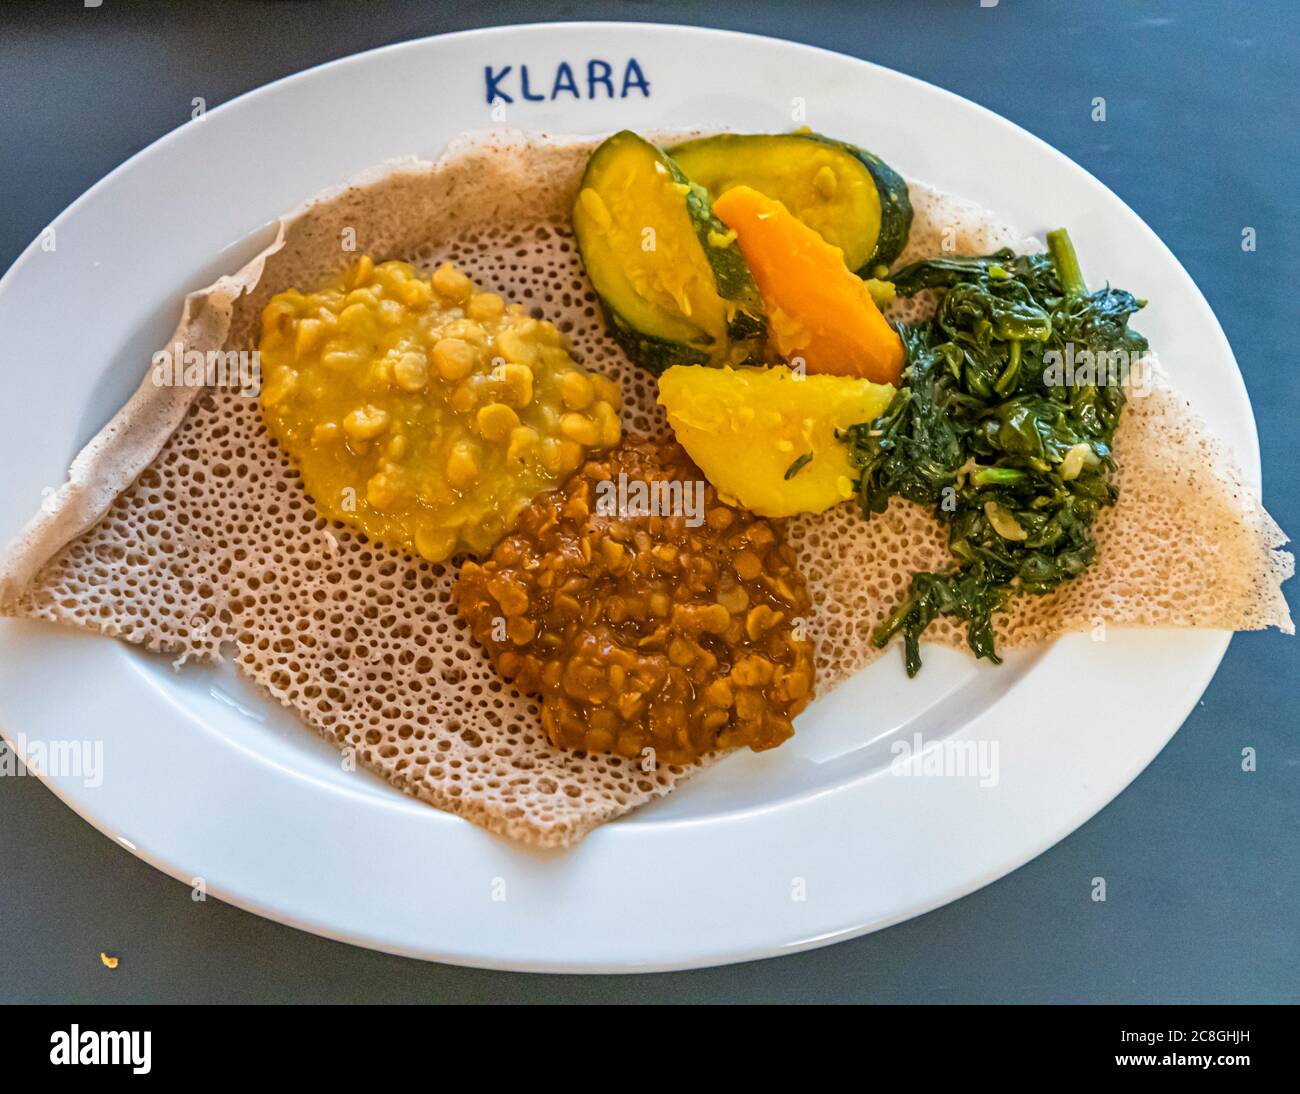 Eritrean dish Ingerra at Klara Food Court during Corona Measures in Basel, Switzerland Stock Photo